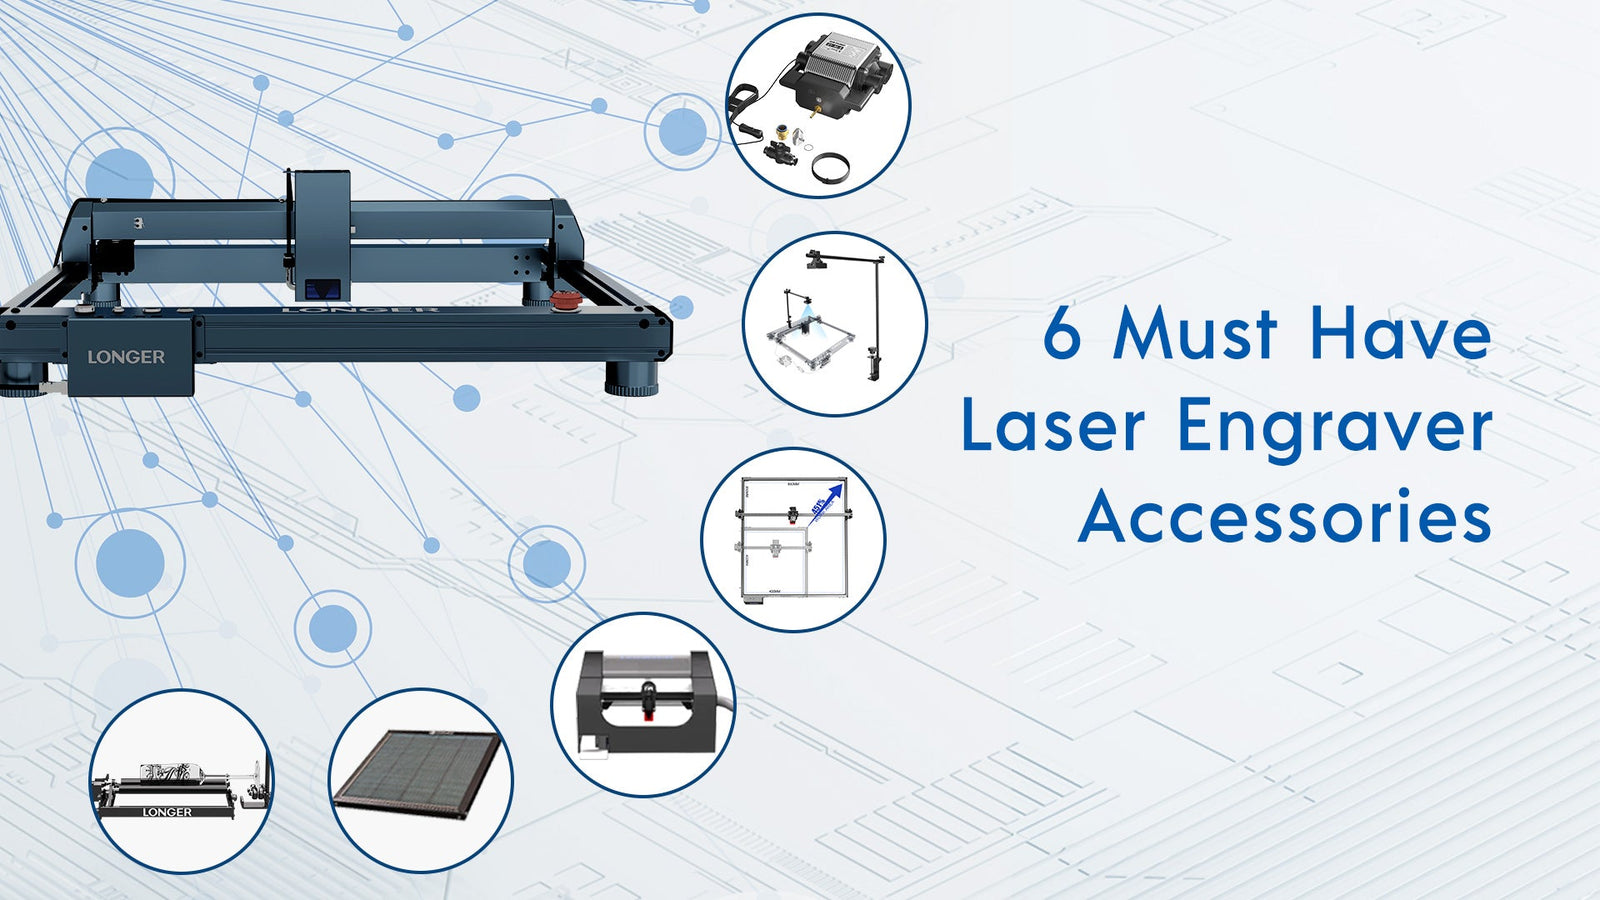 6 Must Have Laser Engraver Accessories - LONGER